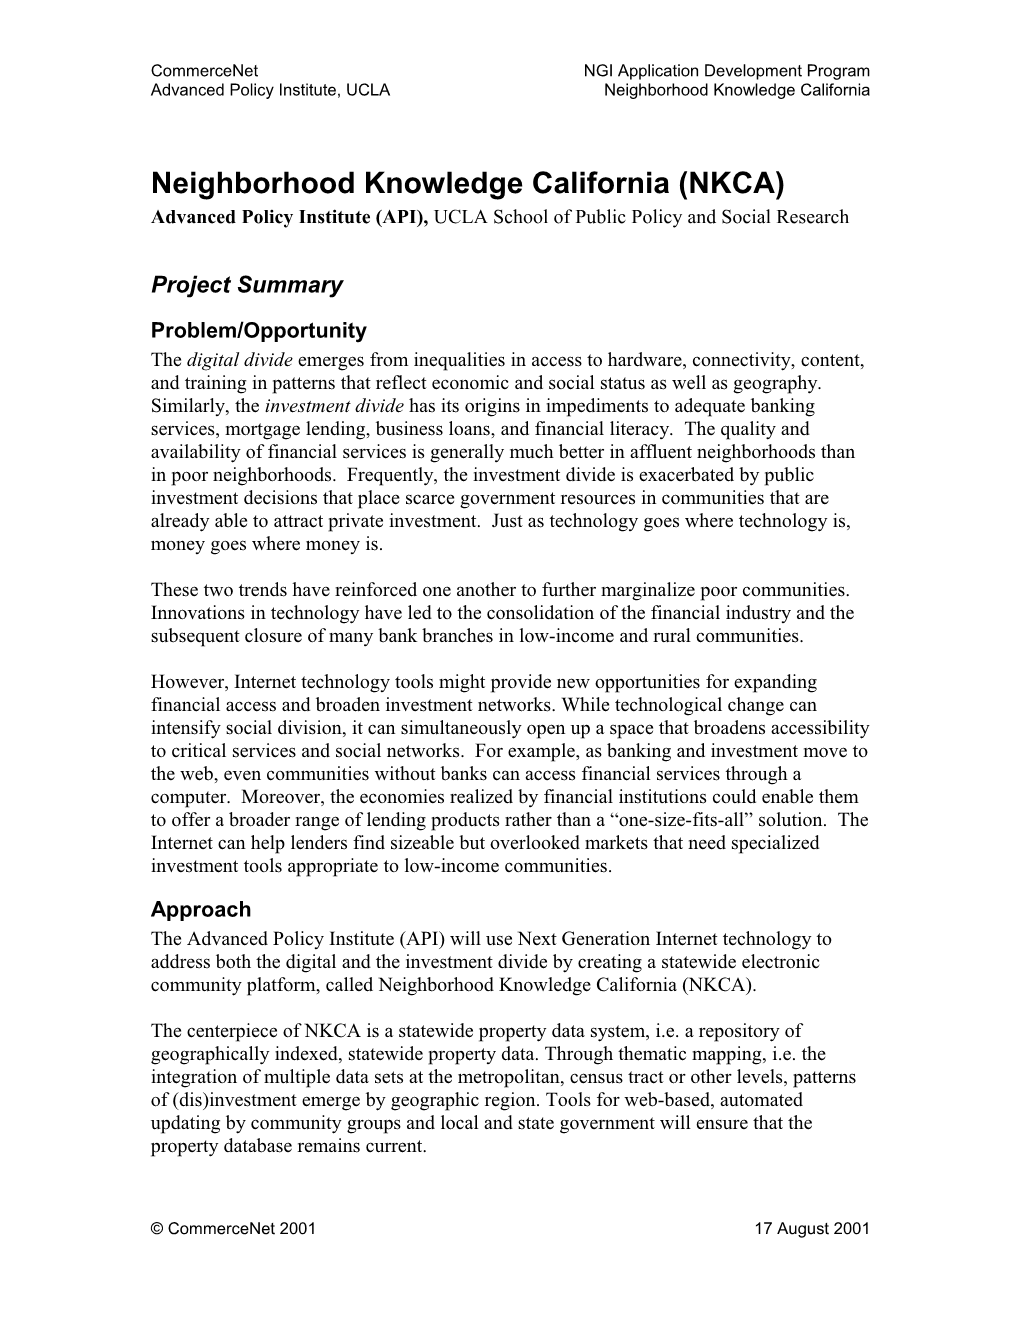 Neighborhood Knowledge California (NKCA)